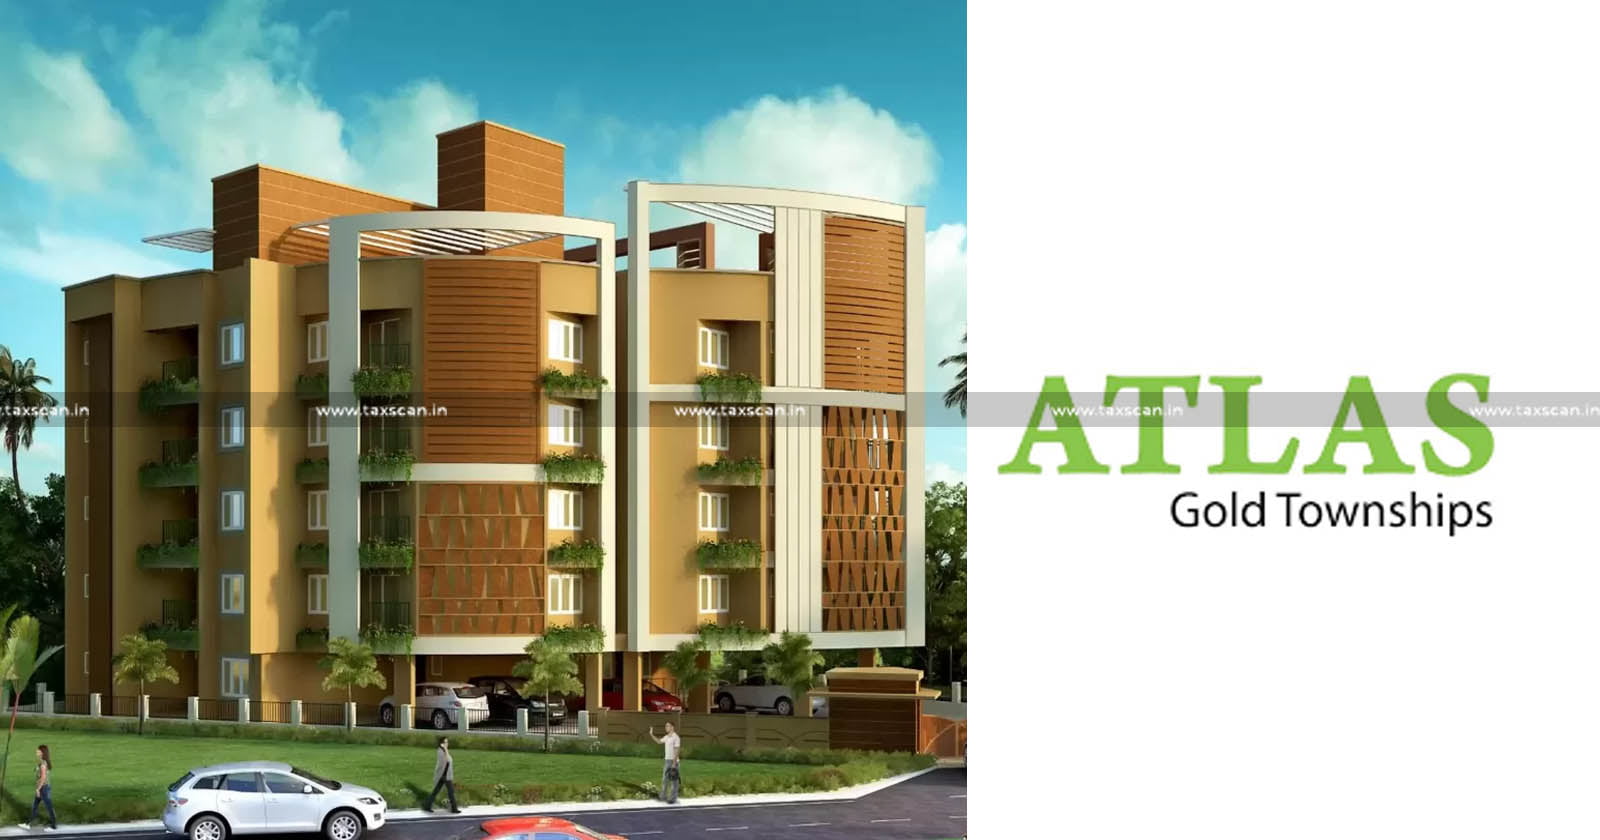 Atlas - Kerala High Court - Assessment Orders - Principles of Natural Justice - Atlas Gold Township - Taxscan